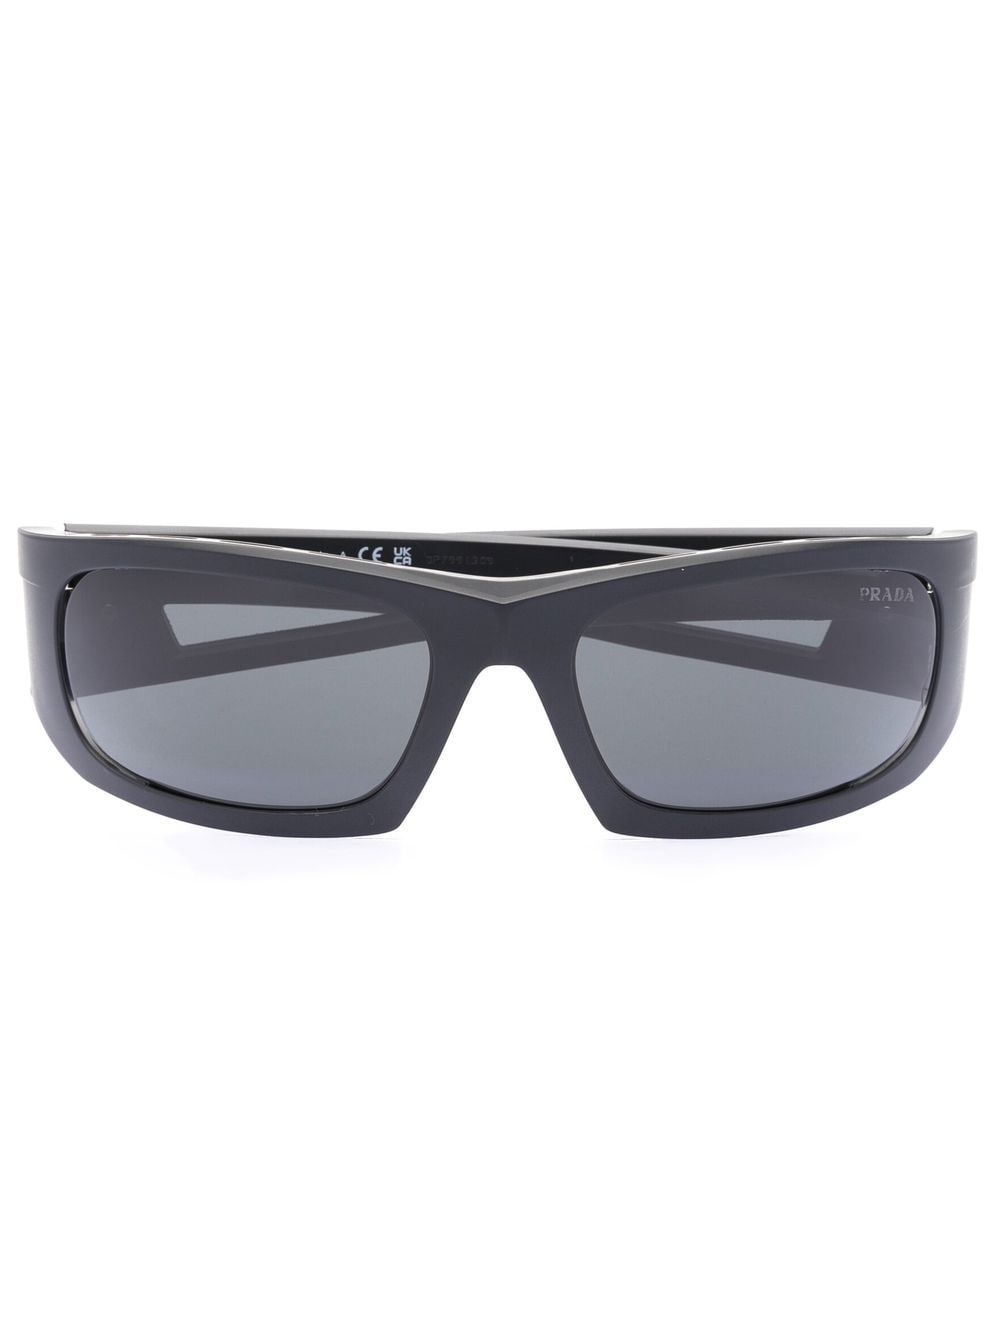 rectangle-frame tinted lenses sunglasses - 1